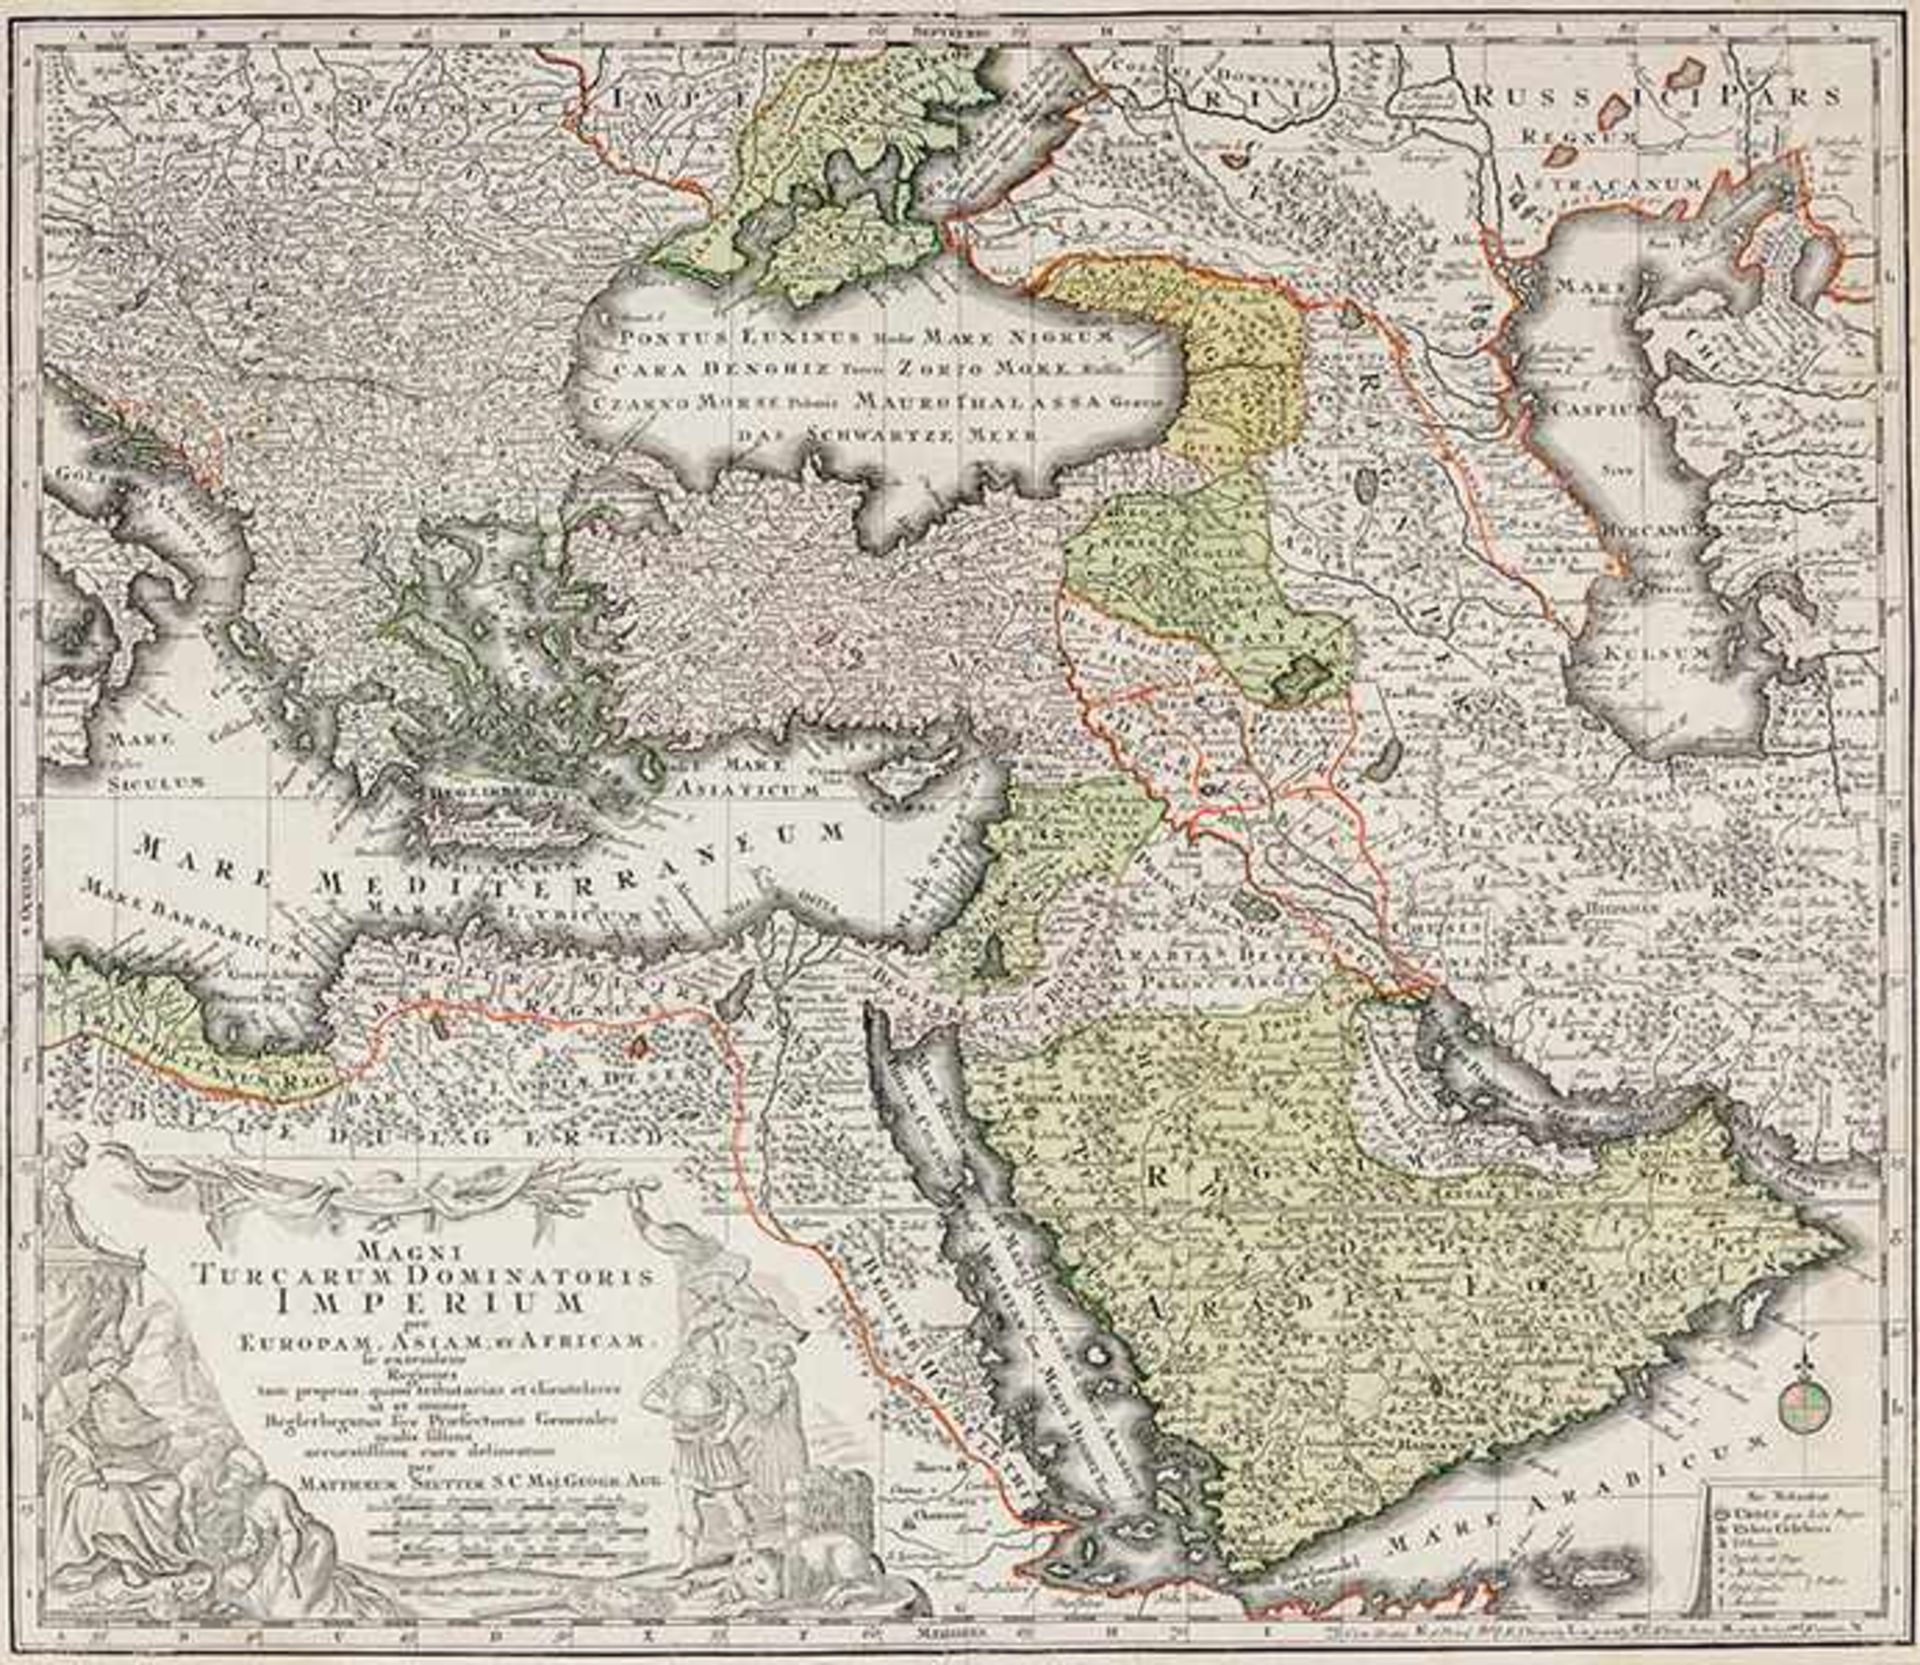 Karten - Türkei - - Seutter, Matthäus. Magni Turcarum Dominatoris Imperium per Europam, Asiam, et